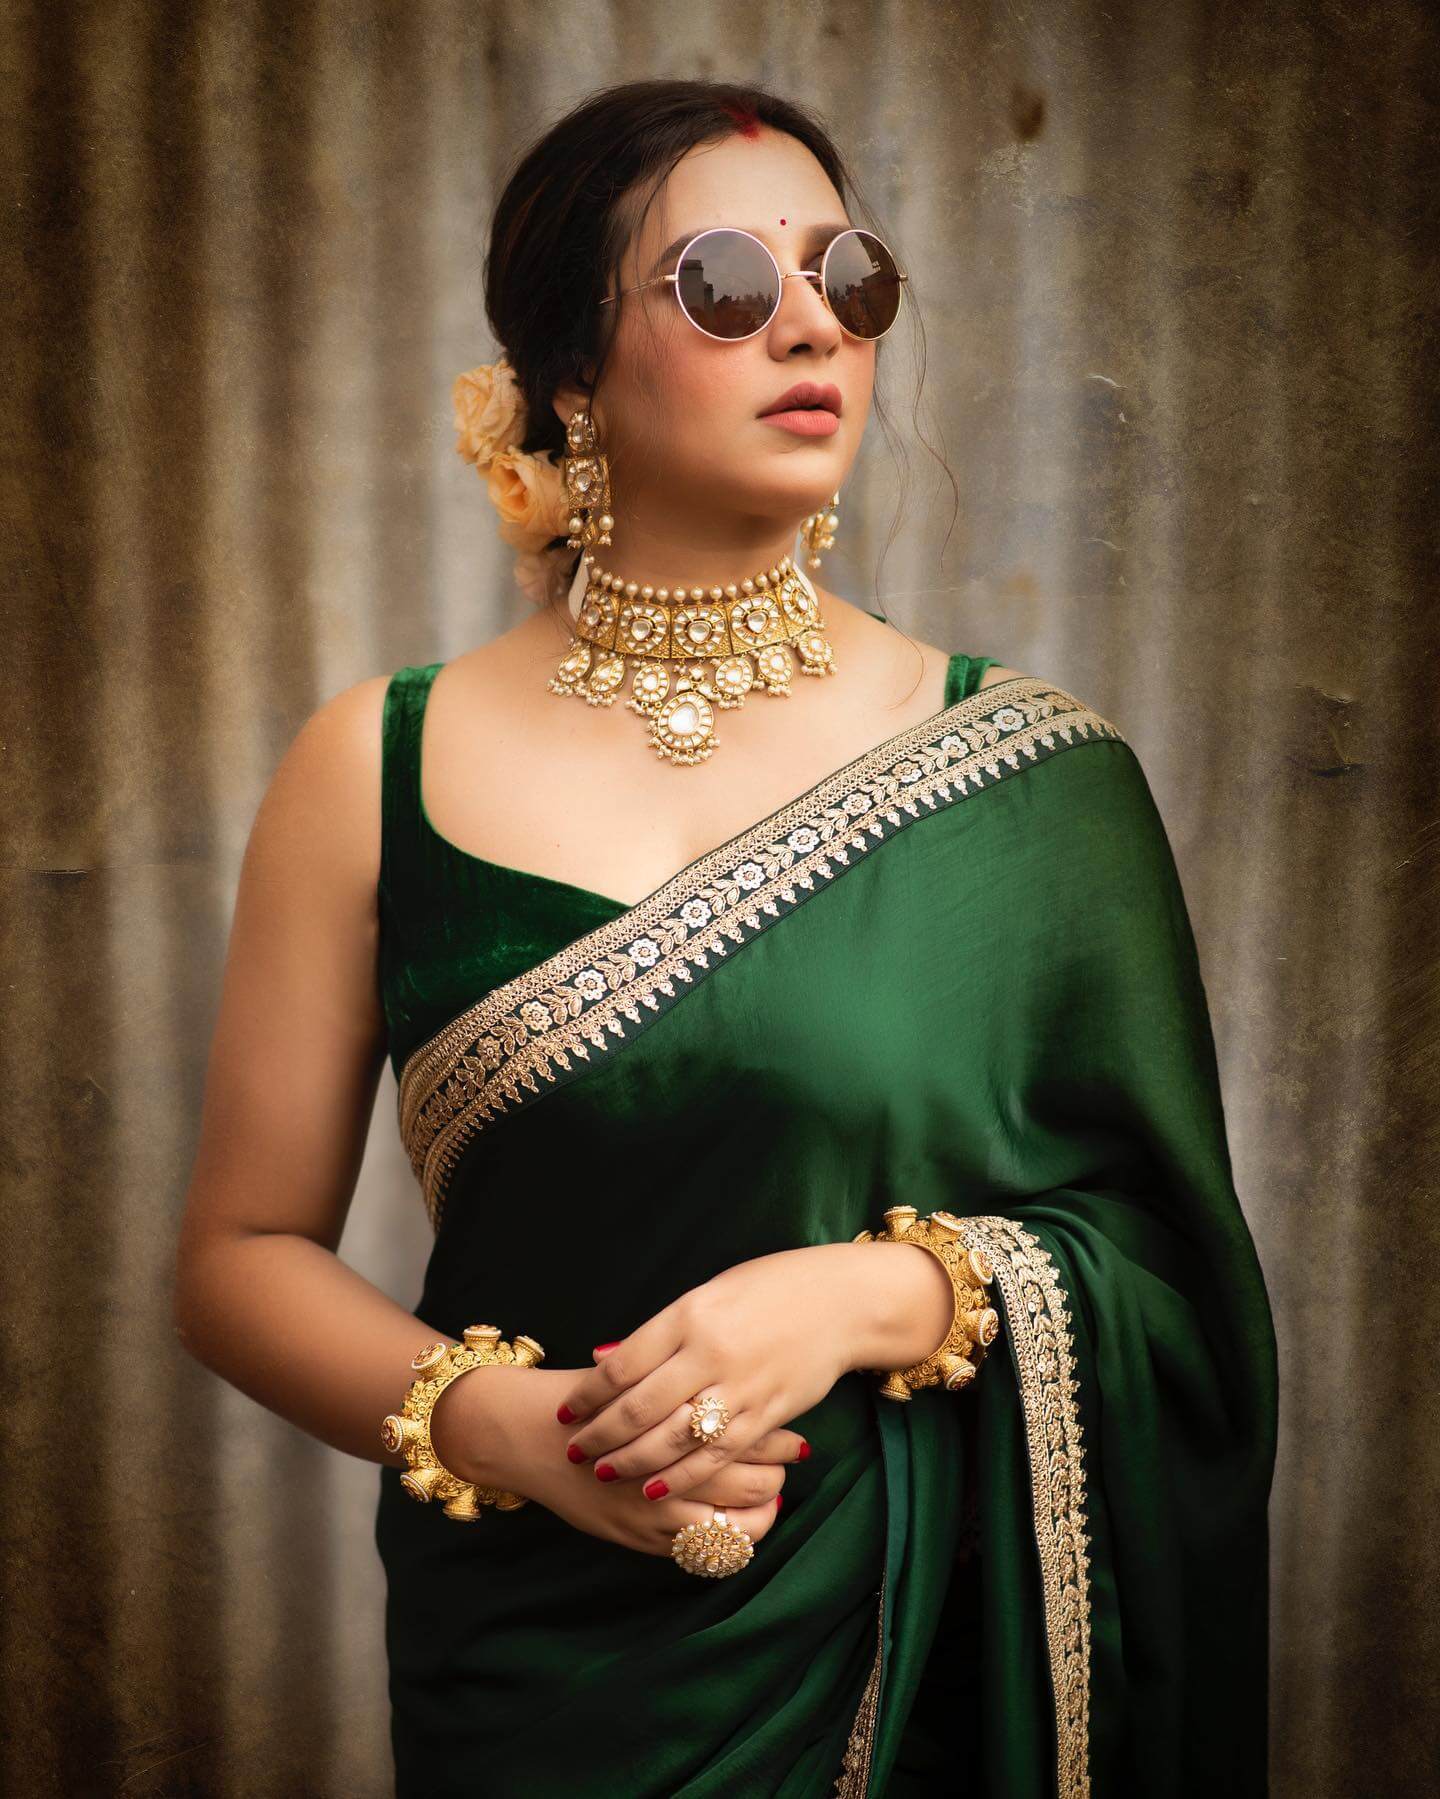 Subhashree Ganguly Dagbang Look In Bottle Green Saree With Sleeveless Blouse & Round Sunglasses